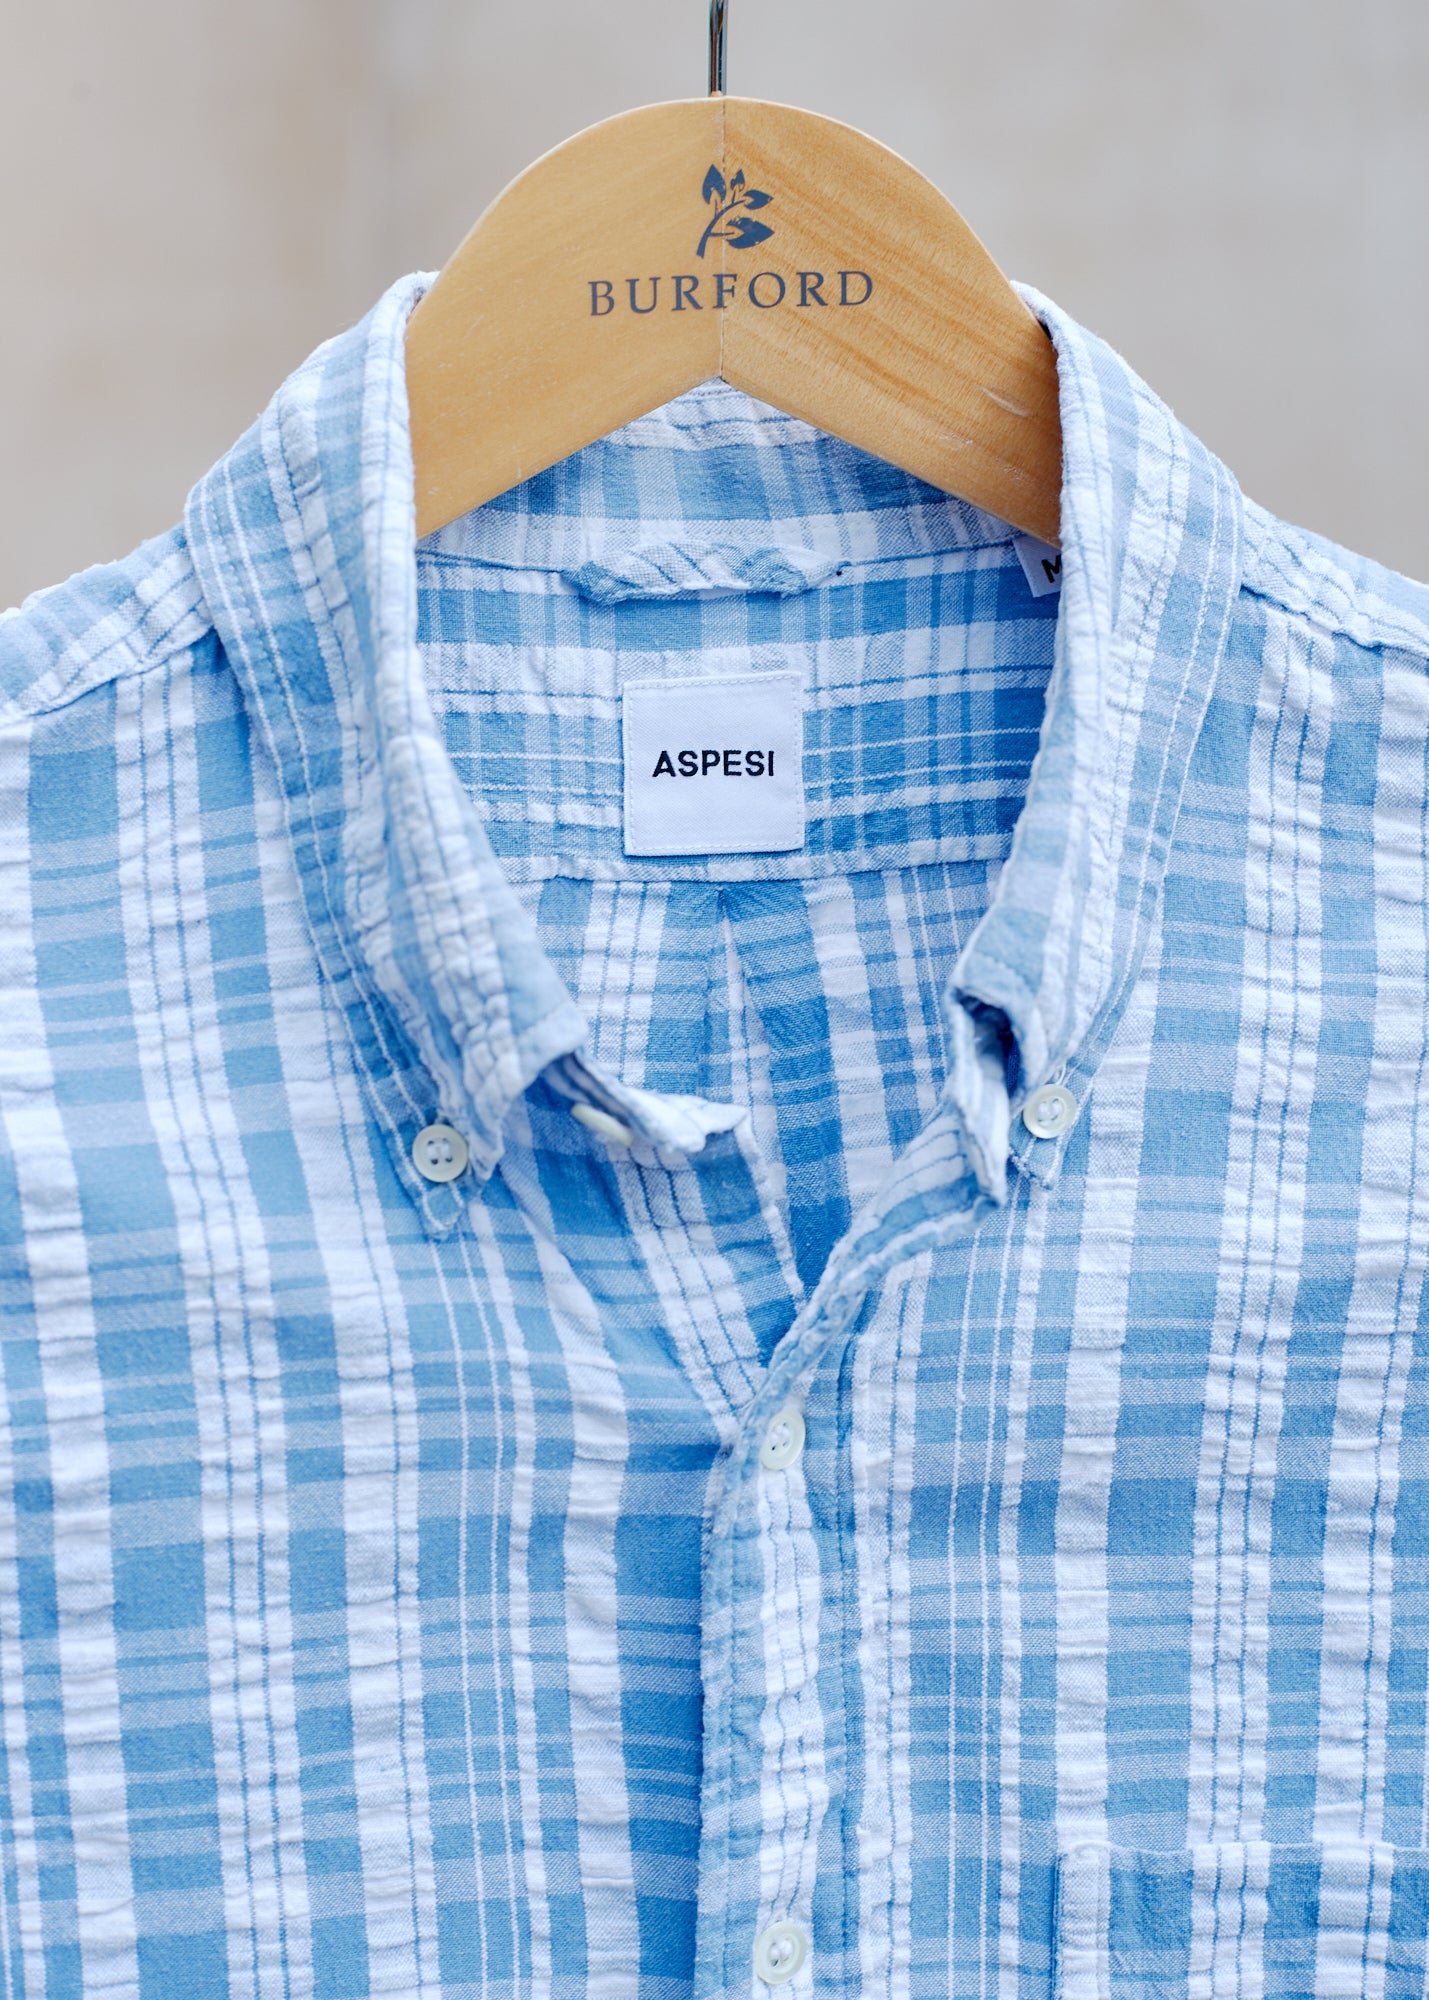 Aspesi Blue & White Check Seersucker Shirt - M